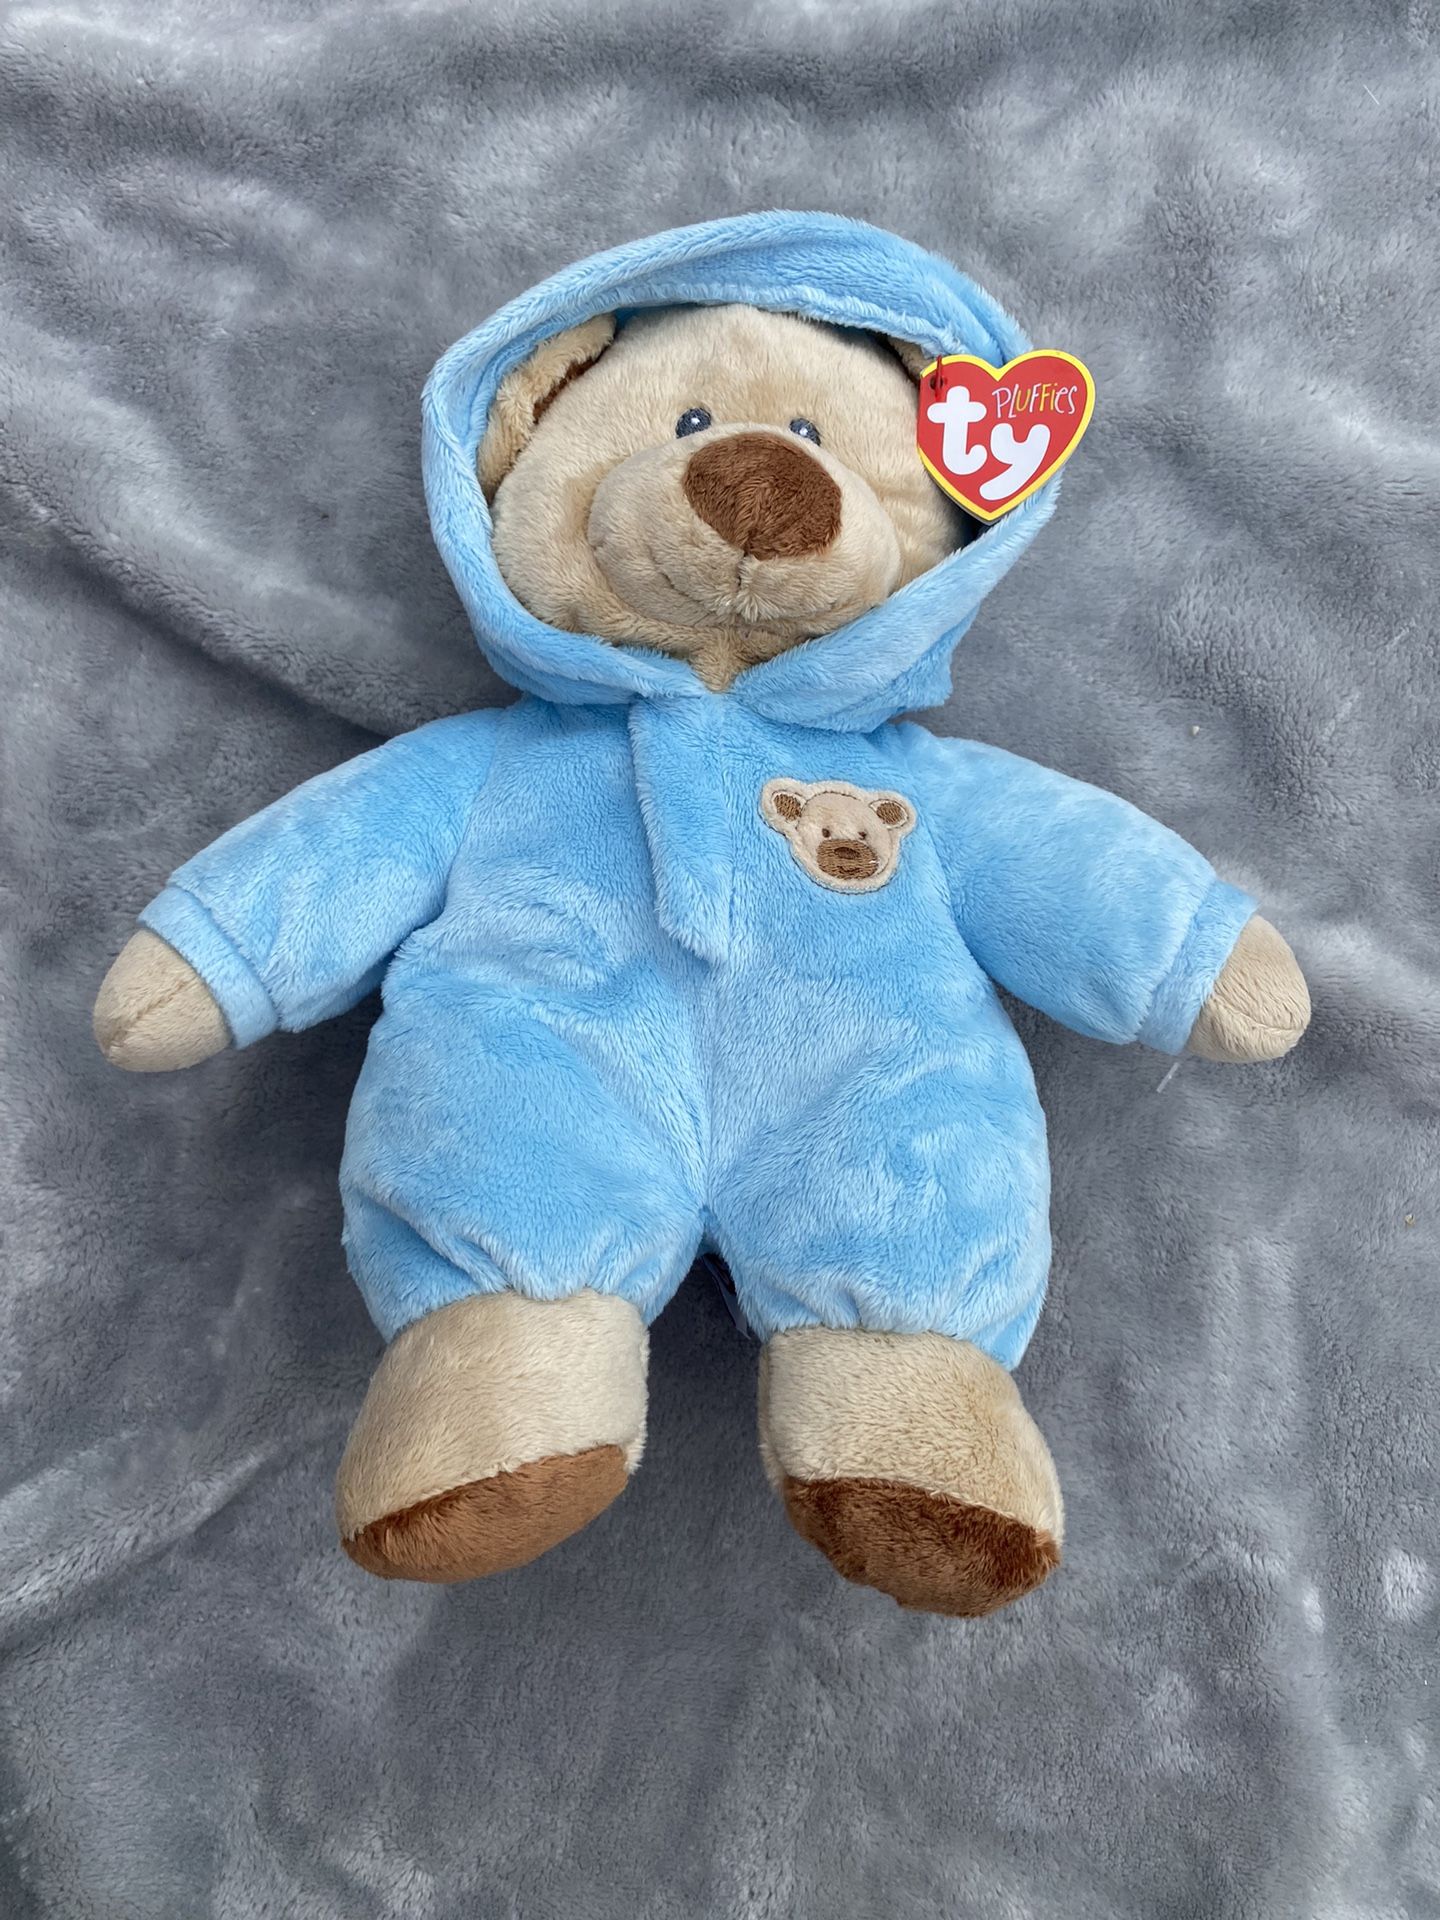 Brand New Ty Pluffies Baby Bear Blue Teddy Bear plush stuffed toy 2012 new